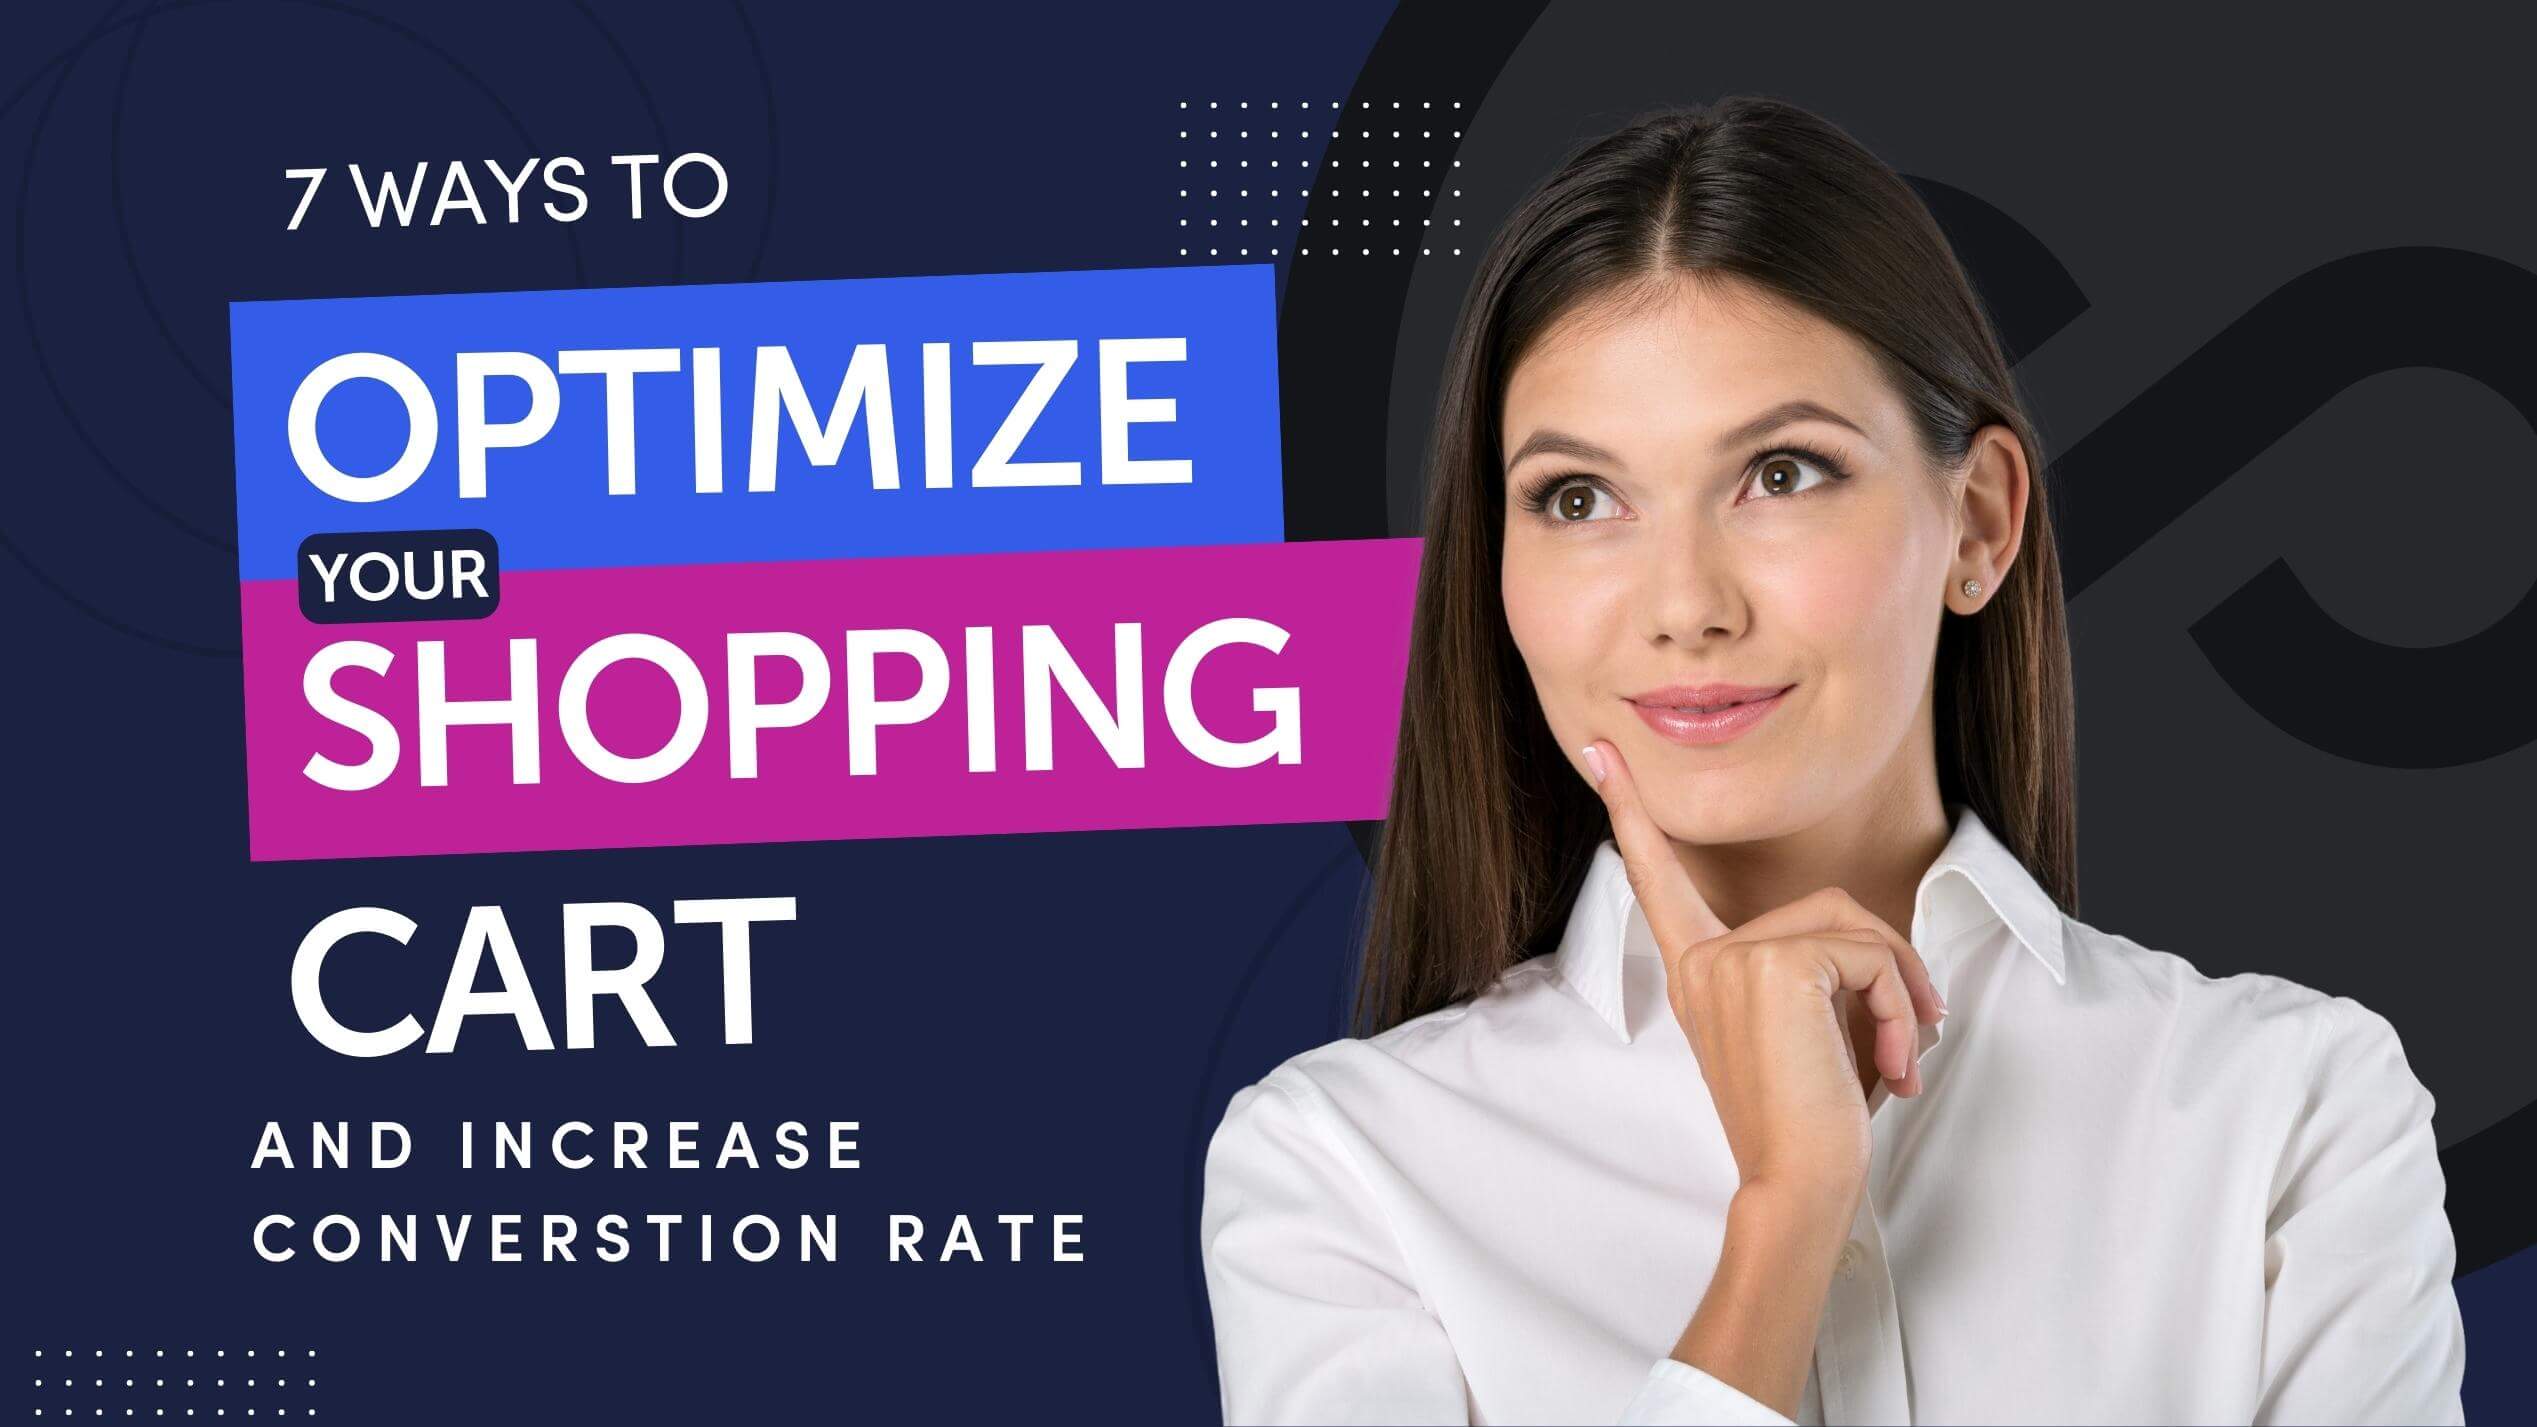 optimize shopping cart & improve conversion rate - Rebuy